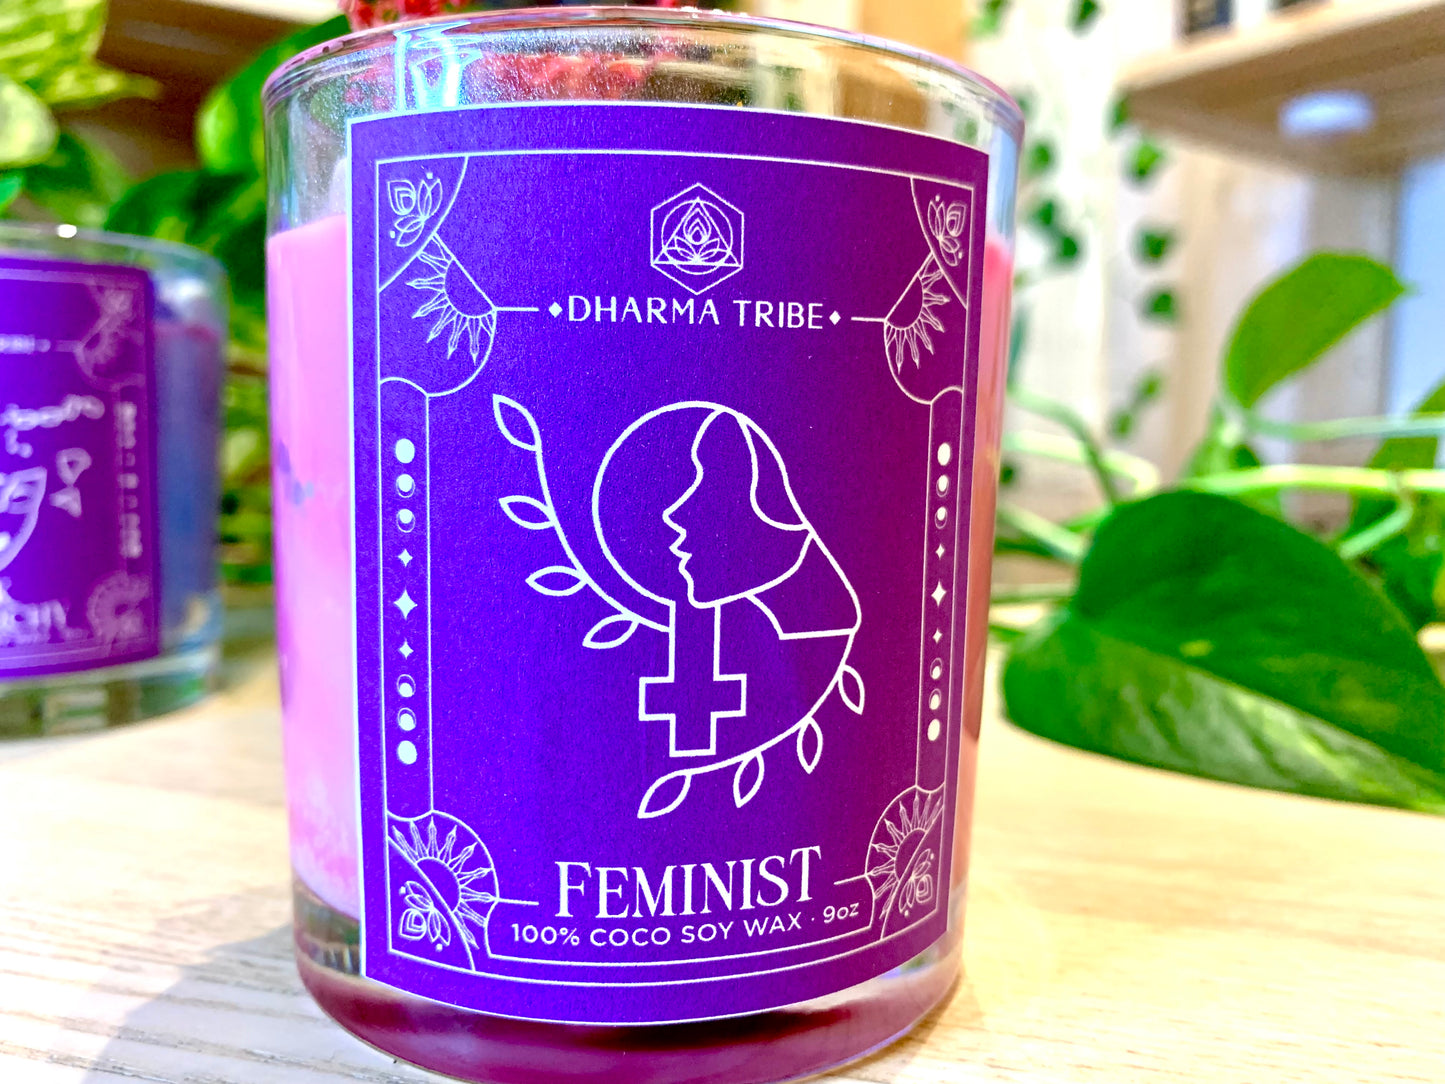 Feminist candle